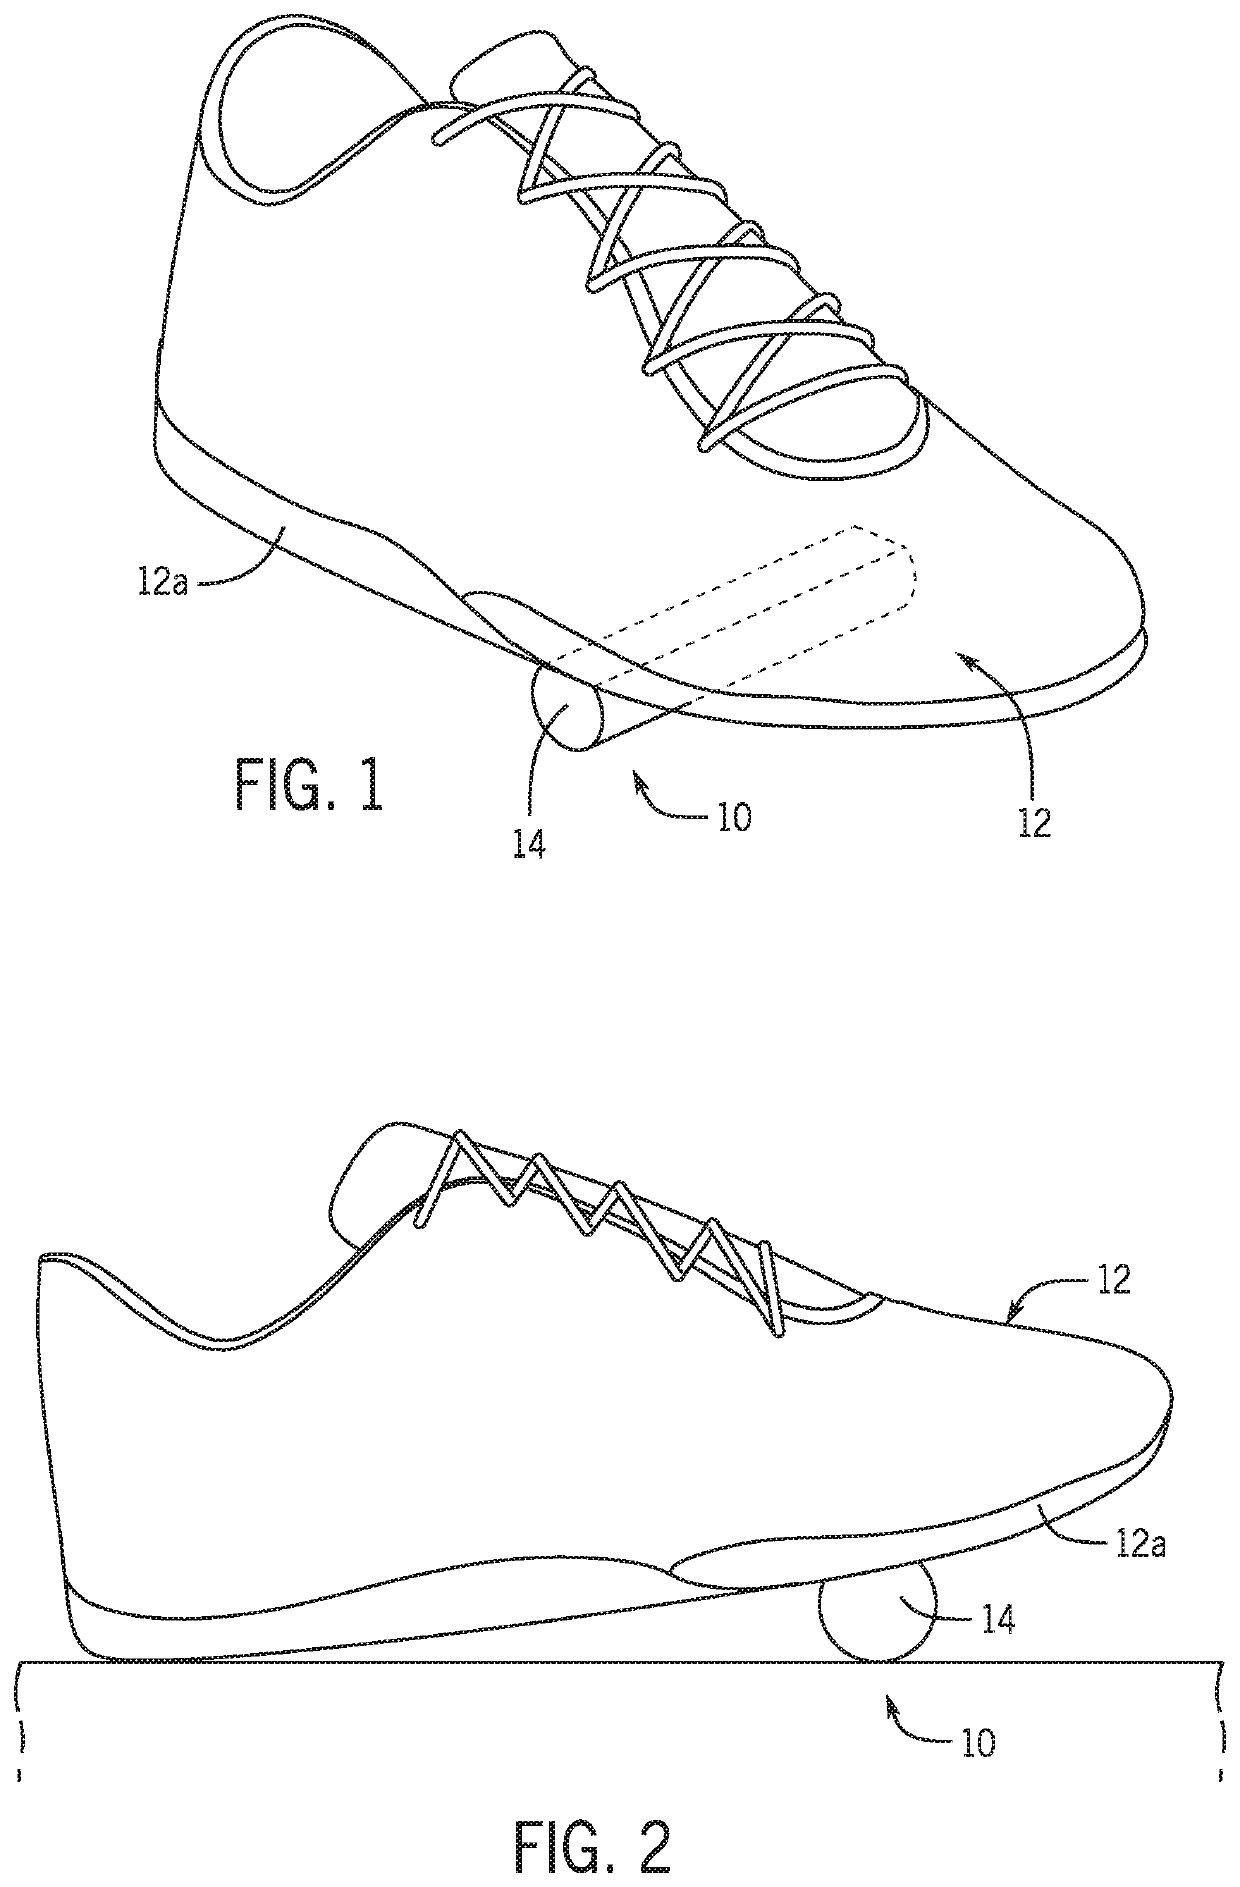 Shoe attachment for preventing toe walking